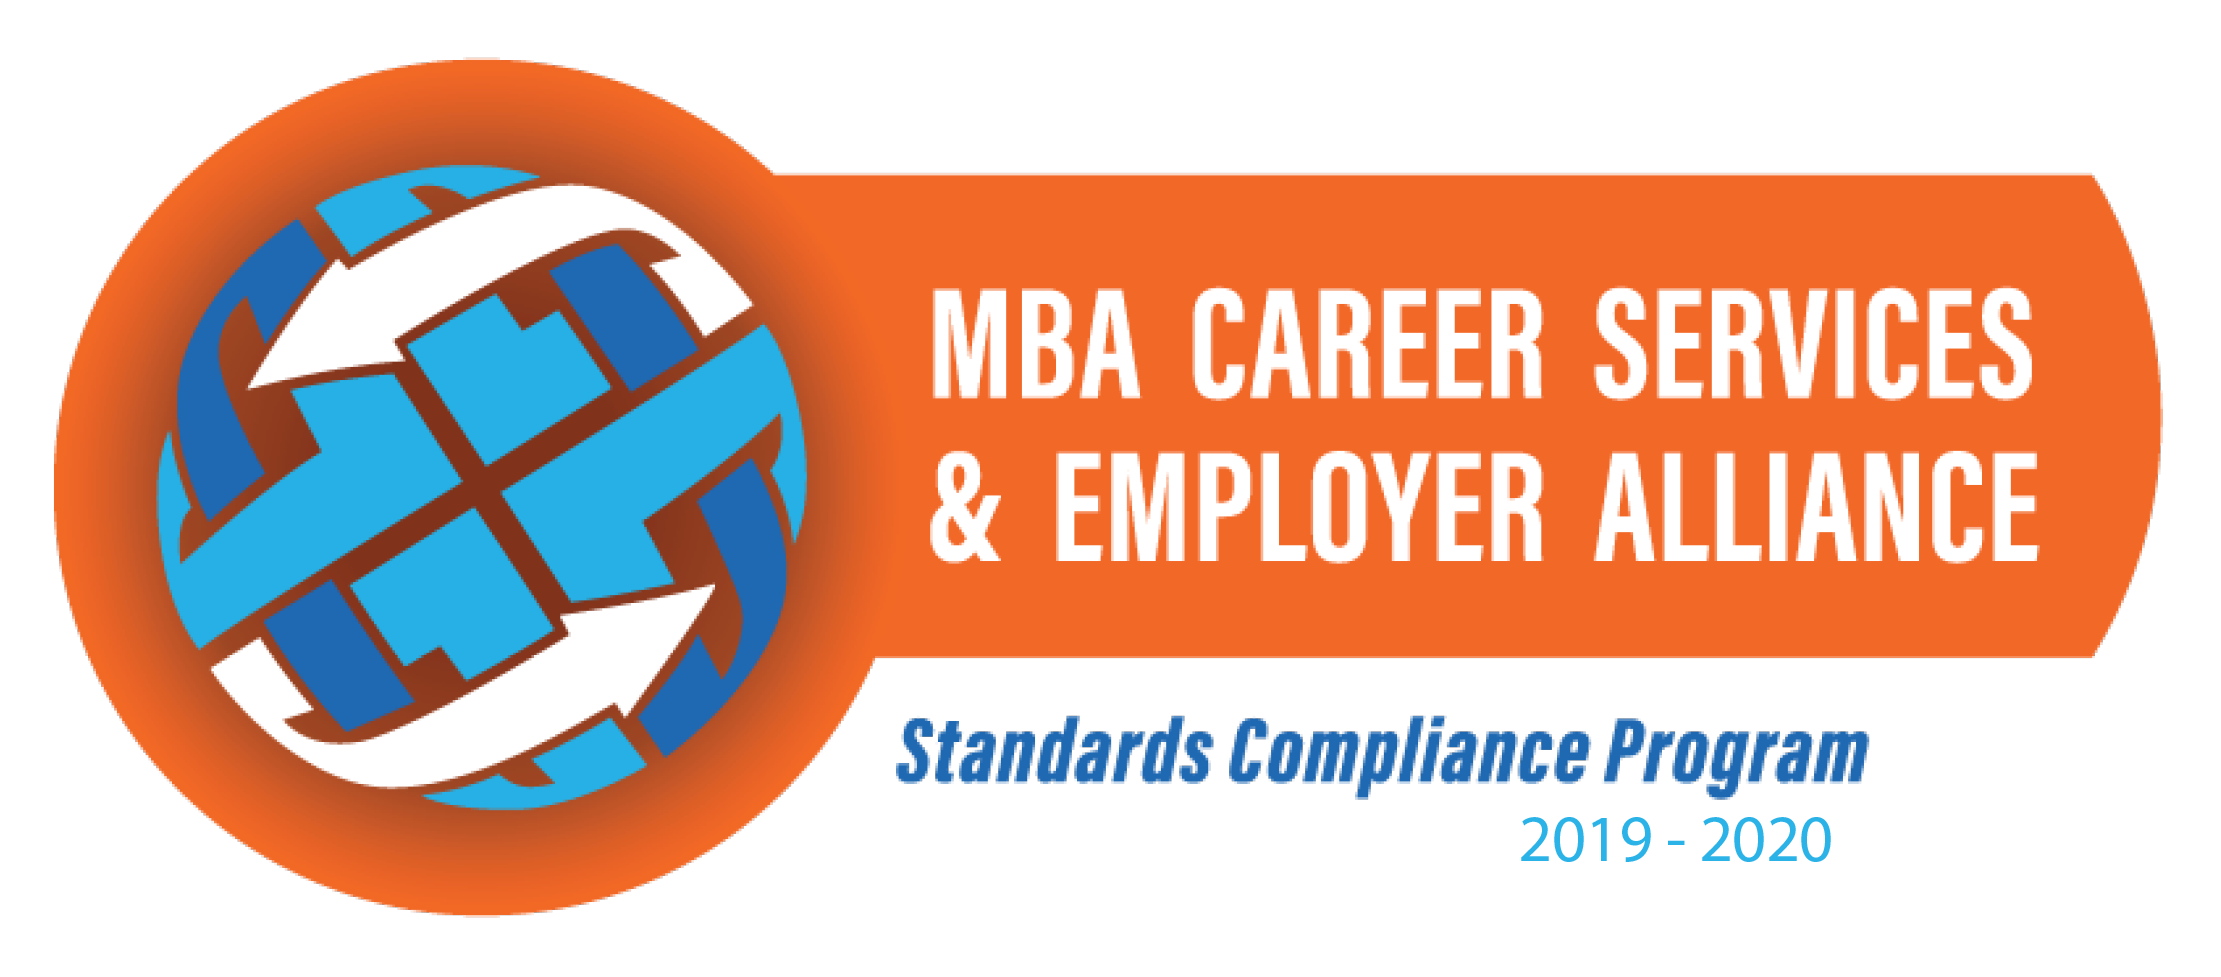 MBA Career Services Alliance logo